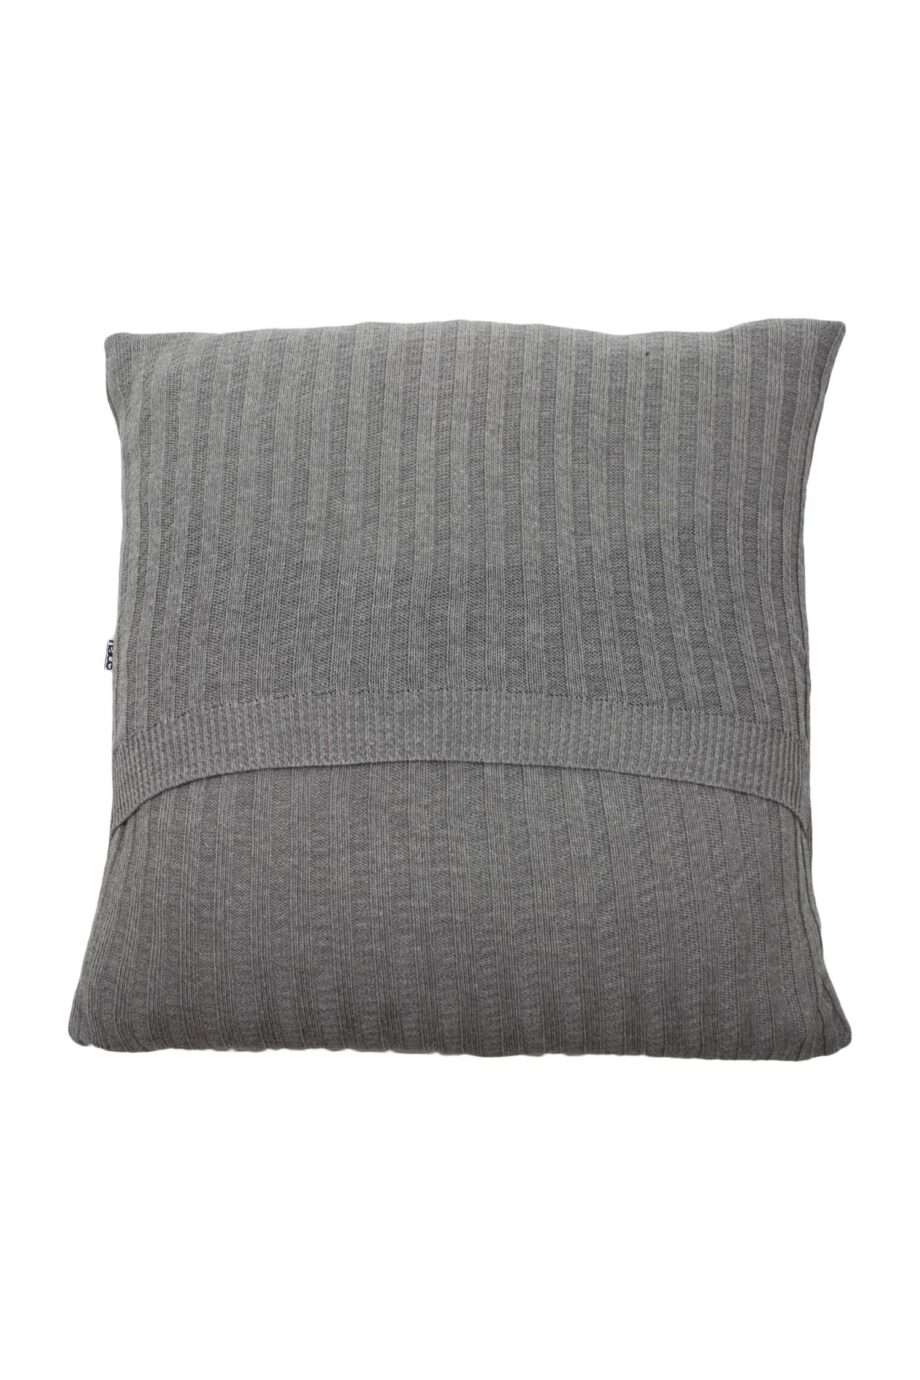 ribs small light grey knitted cotton pillowcase medium